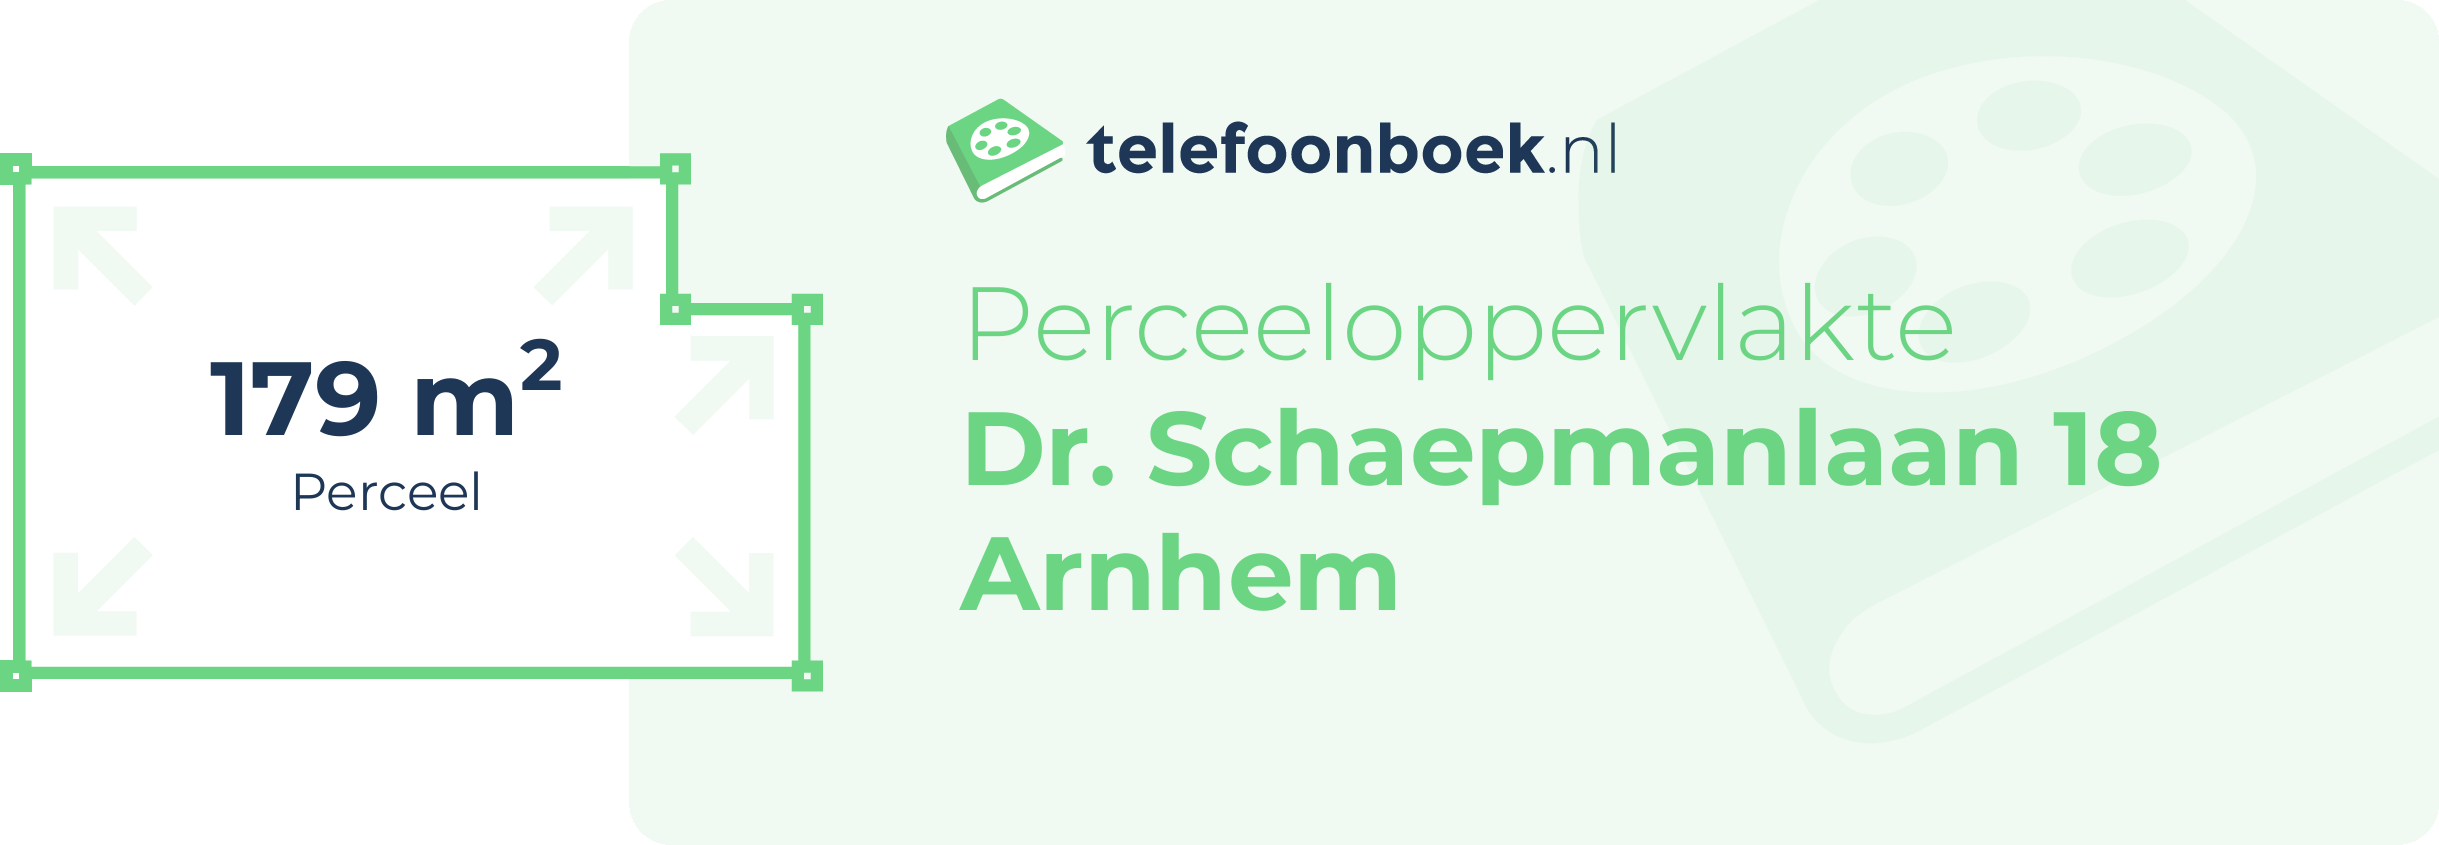 Perceeloppervlakte Dr. Schaepmanlaan 18 Arnhem